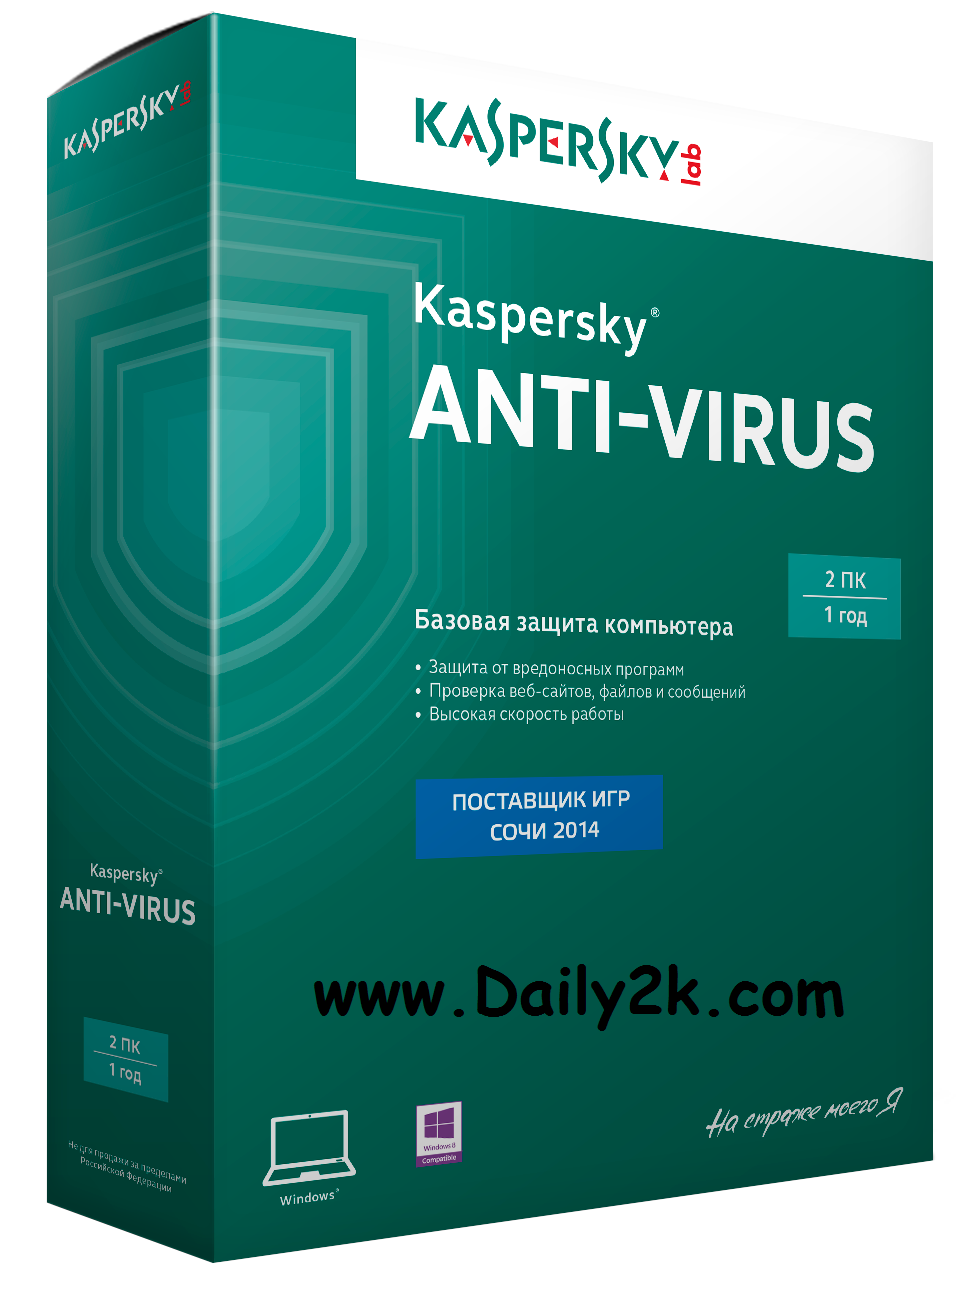 Kaspersky Antivirus 2016 Activation Code